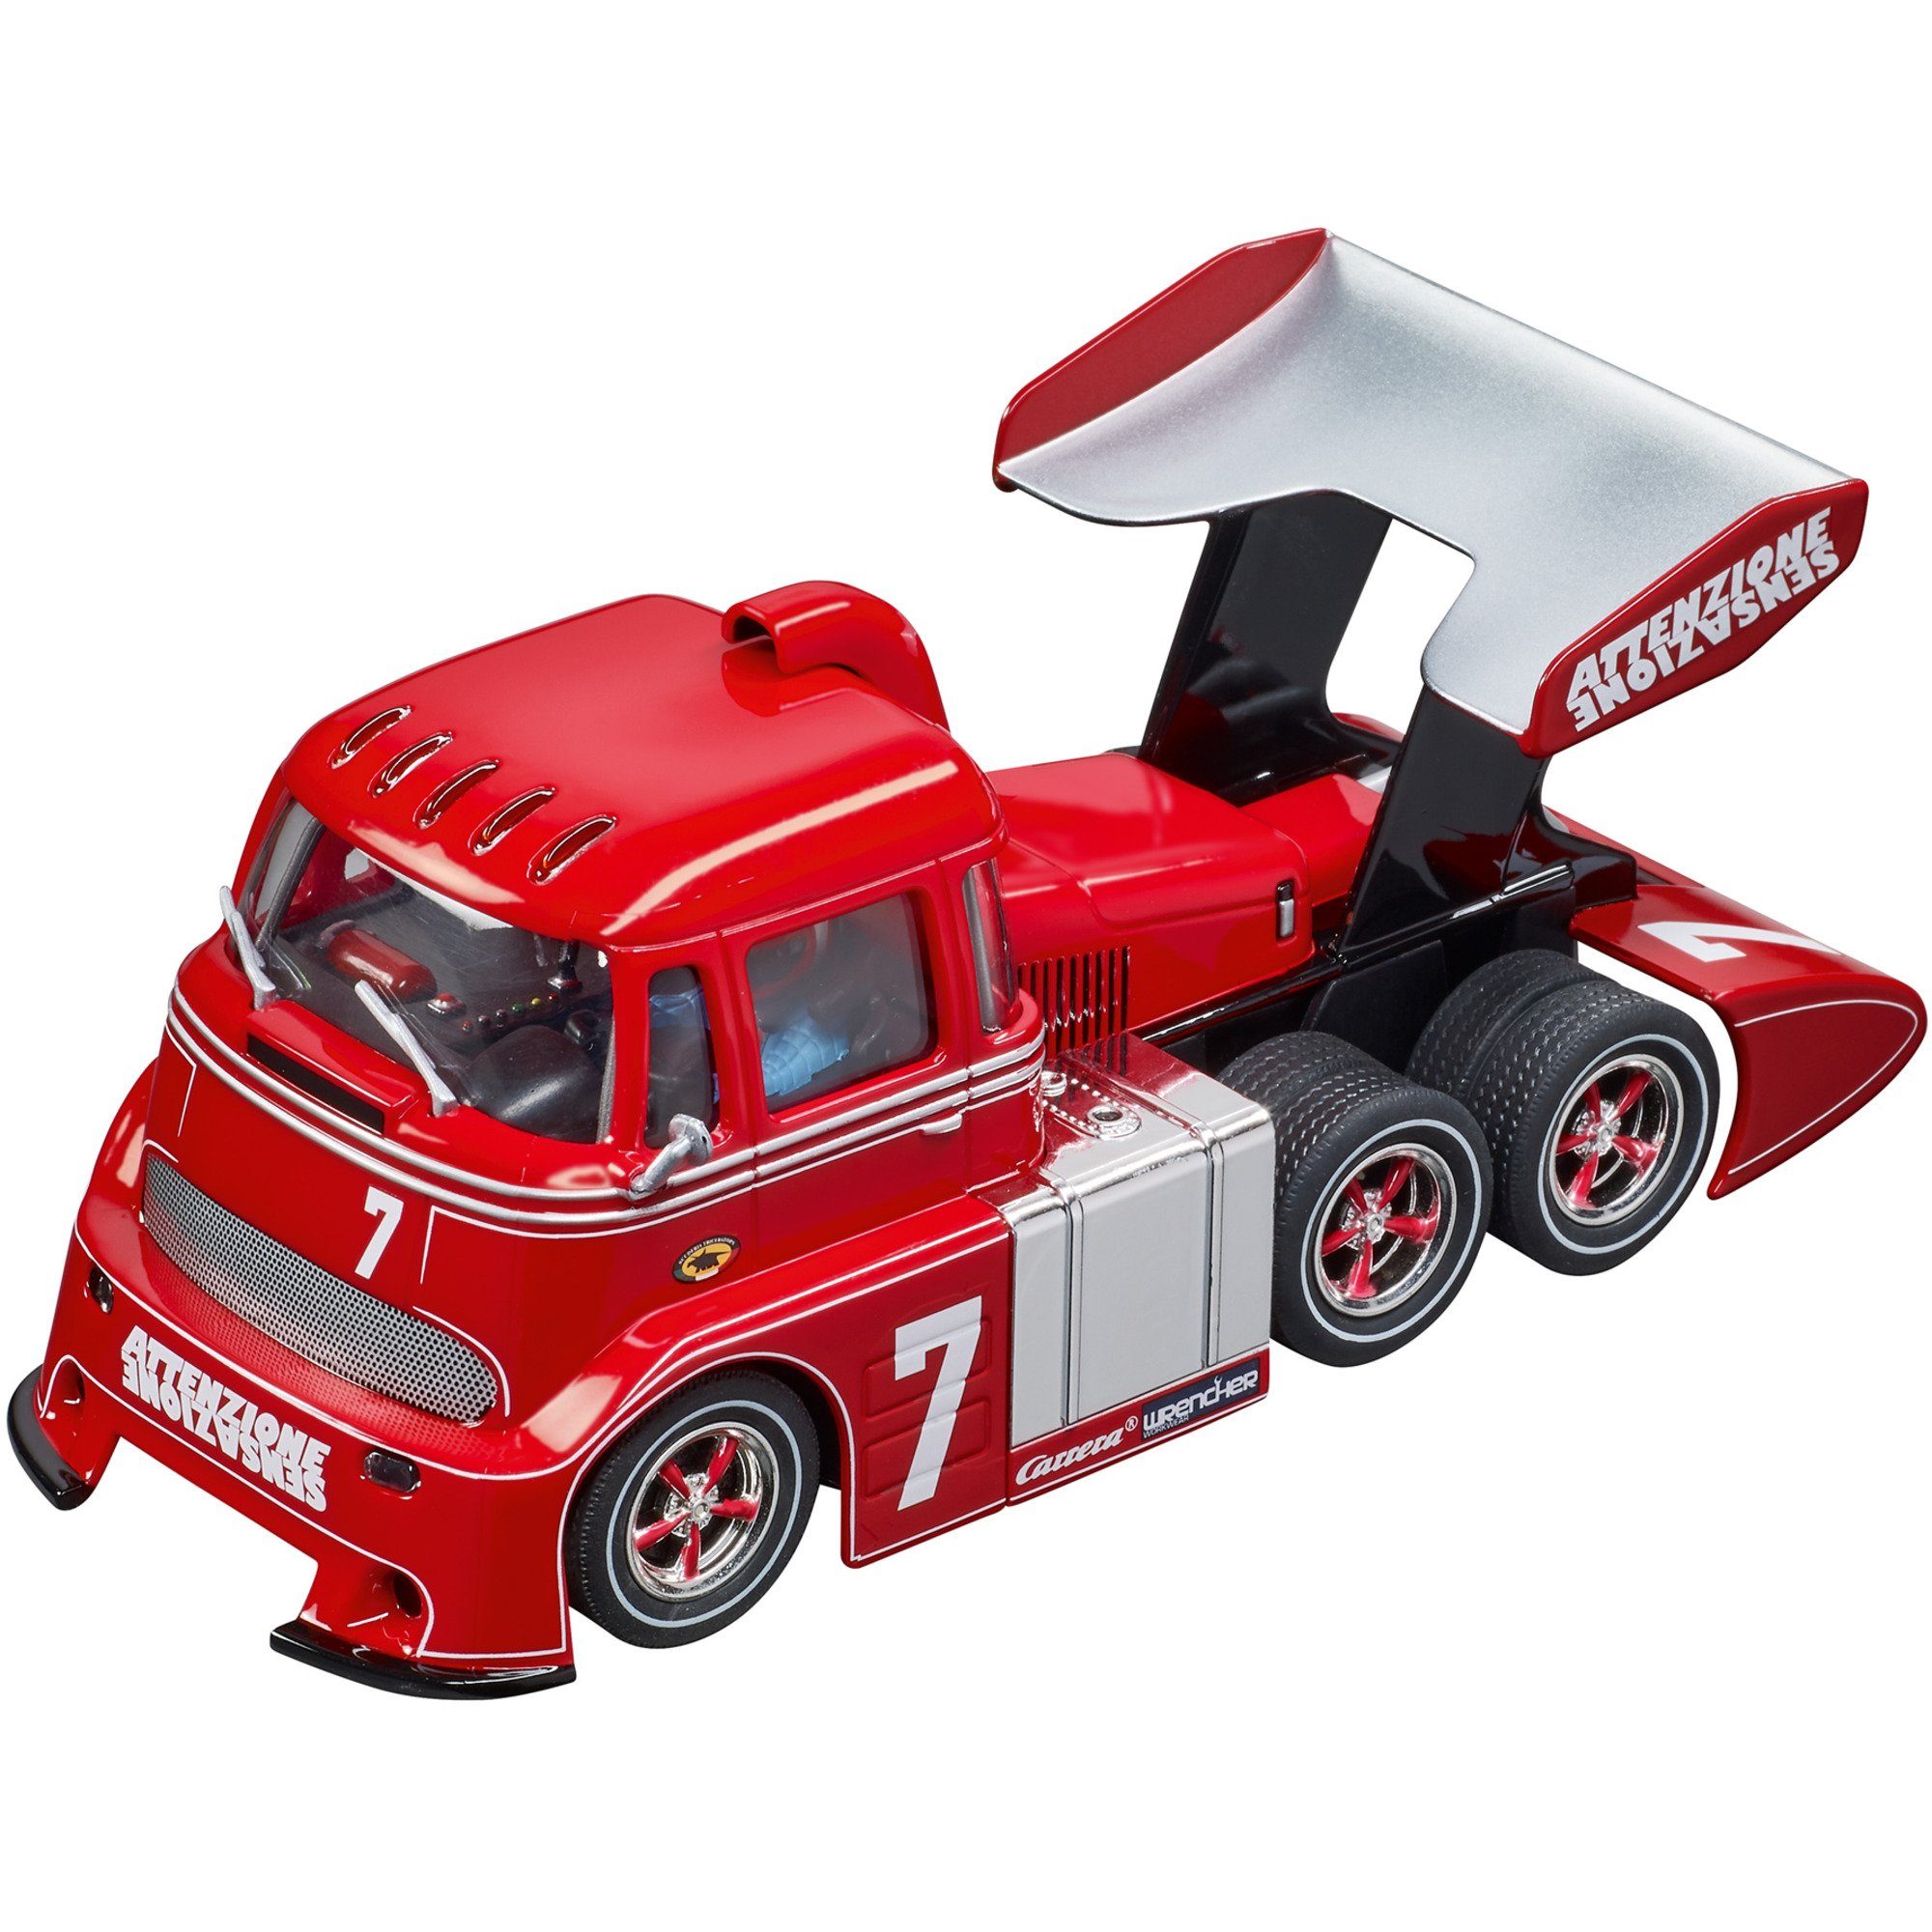 Carrera® Spielzeug-Auto Carrera DIGITAL 132 Race Truck "No.7", Rennwagen